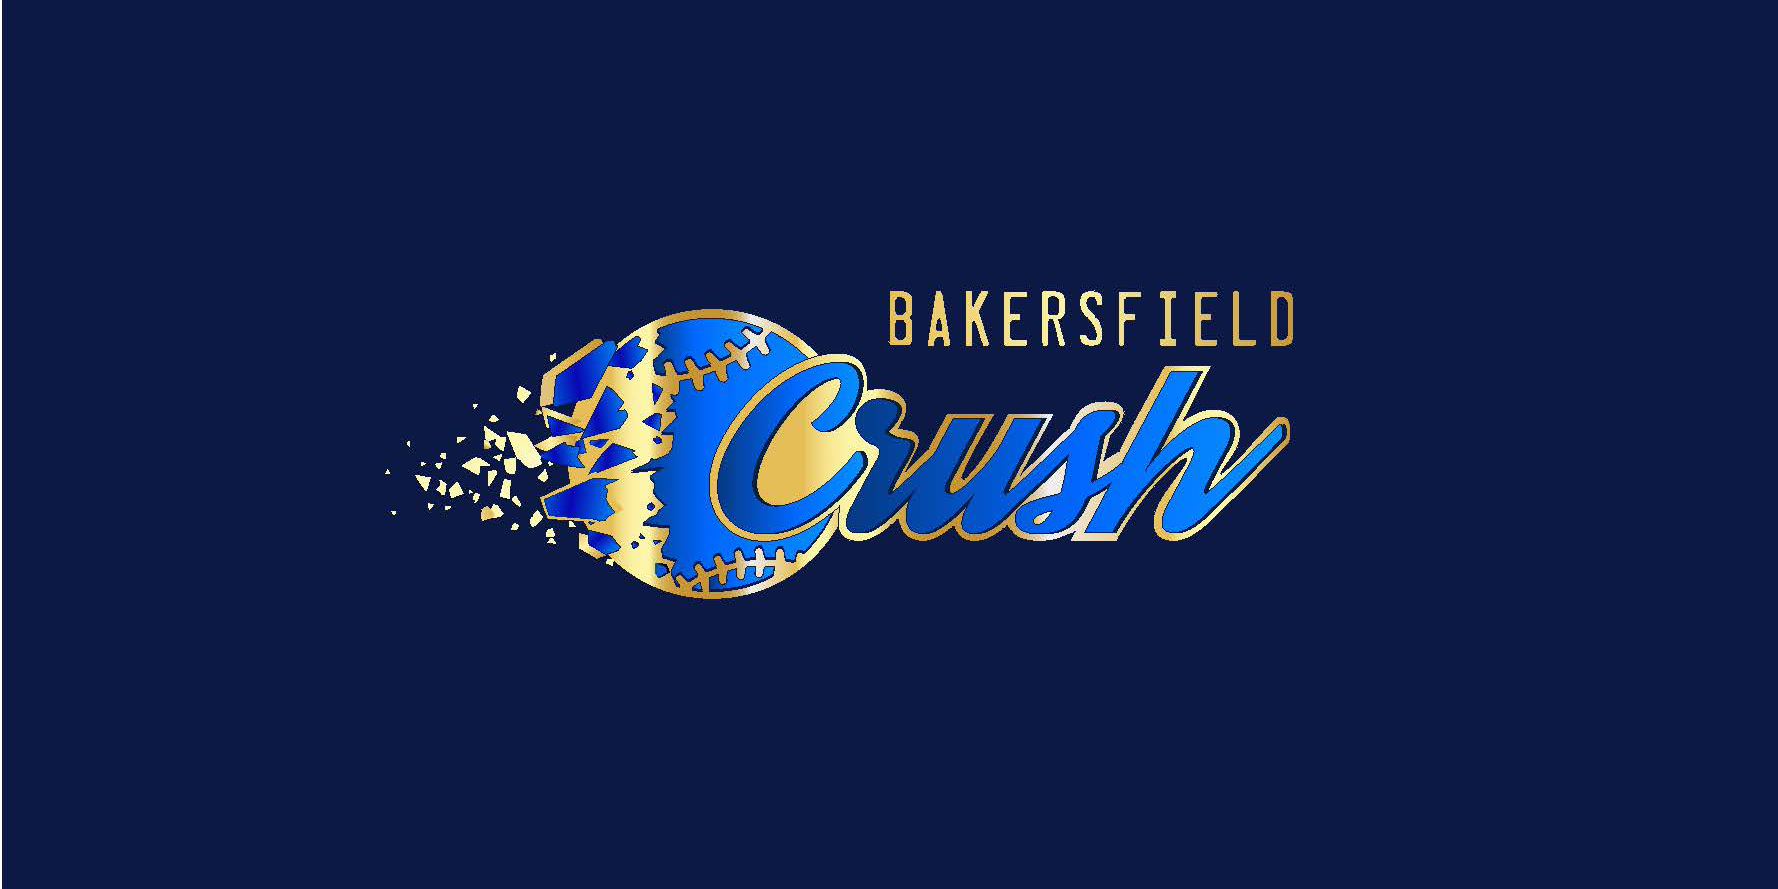 Chain | Cohn | Clark sponsors Bakersfield Crush competitive youth baseball team